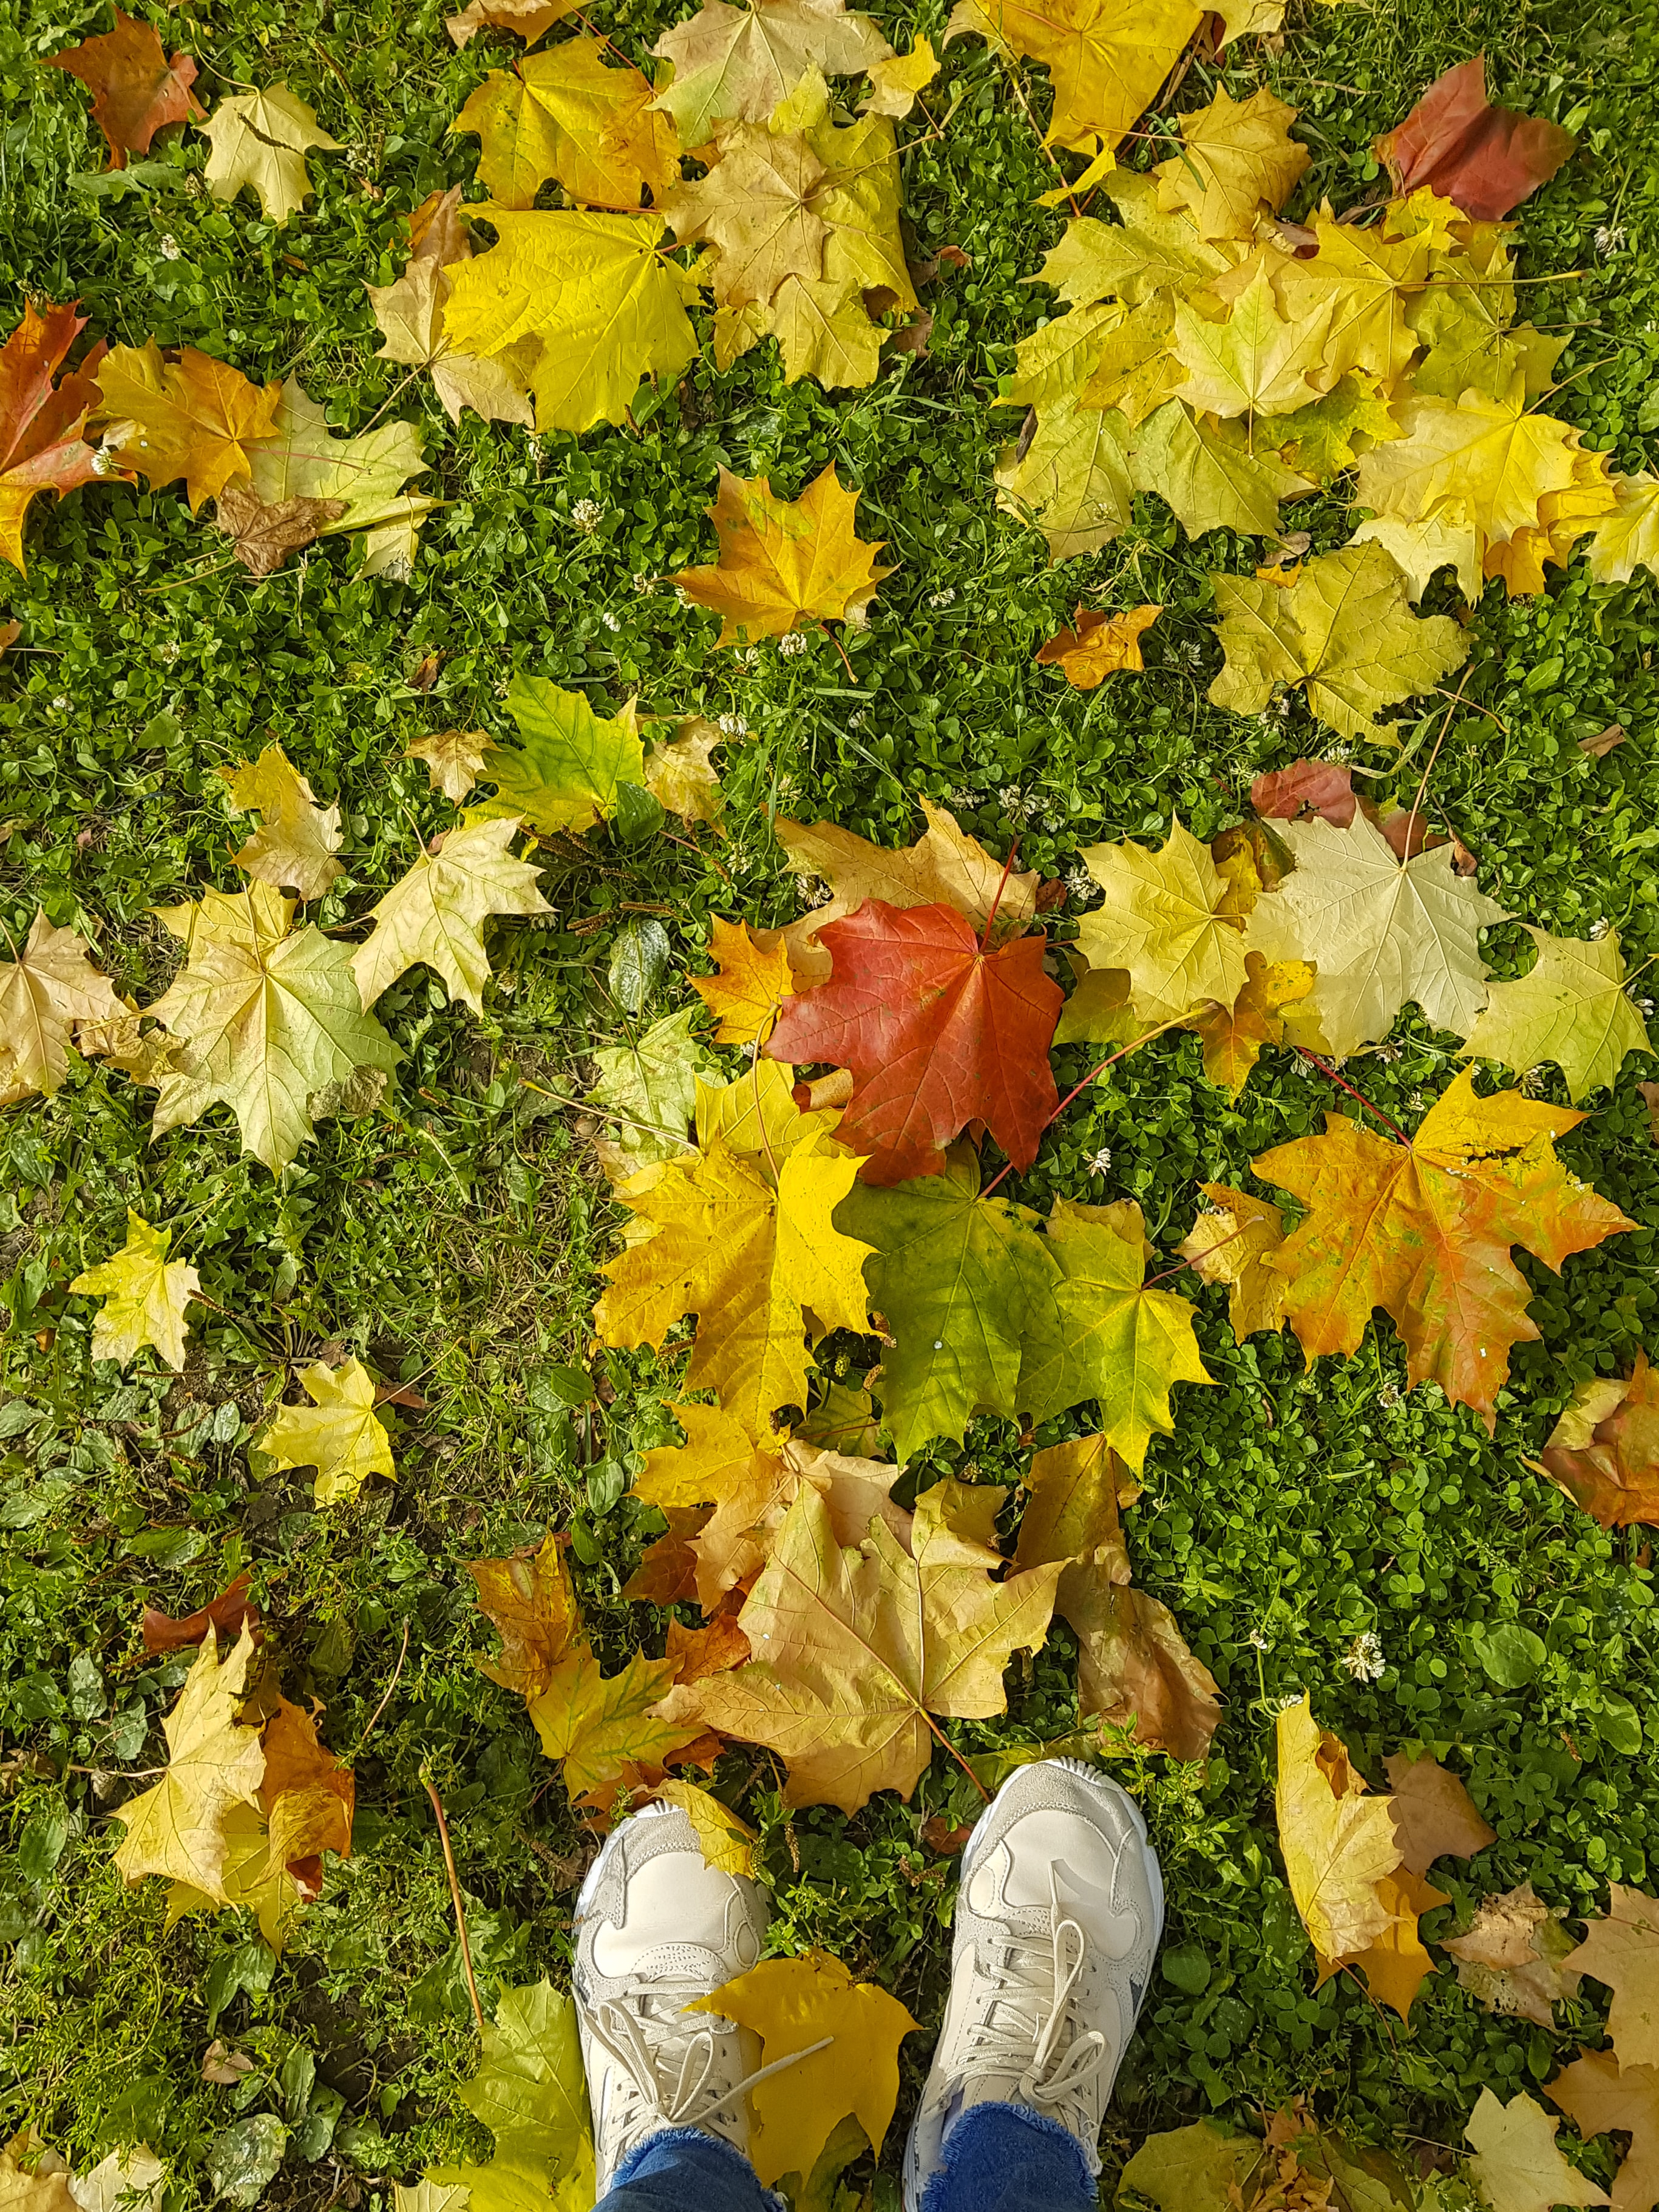 leaves, miscellanea, autumn, grass, miscellaneous, legs, sneakers, maple